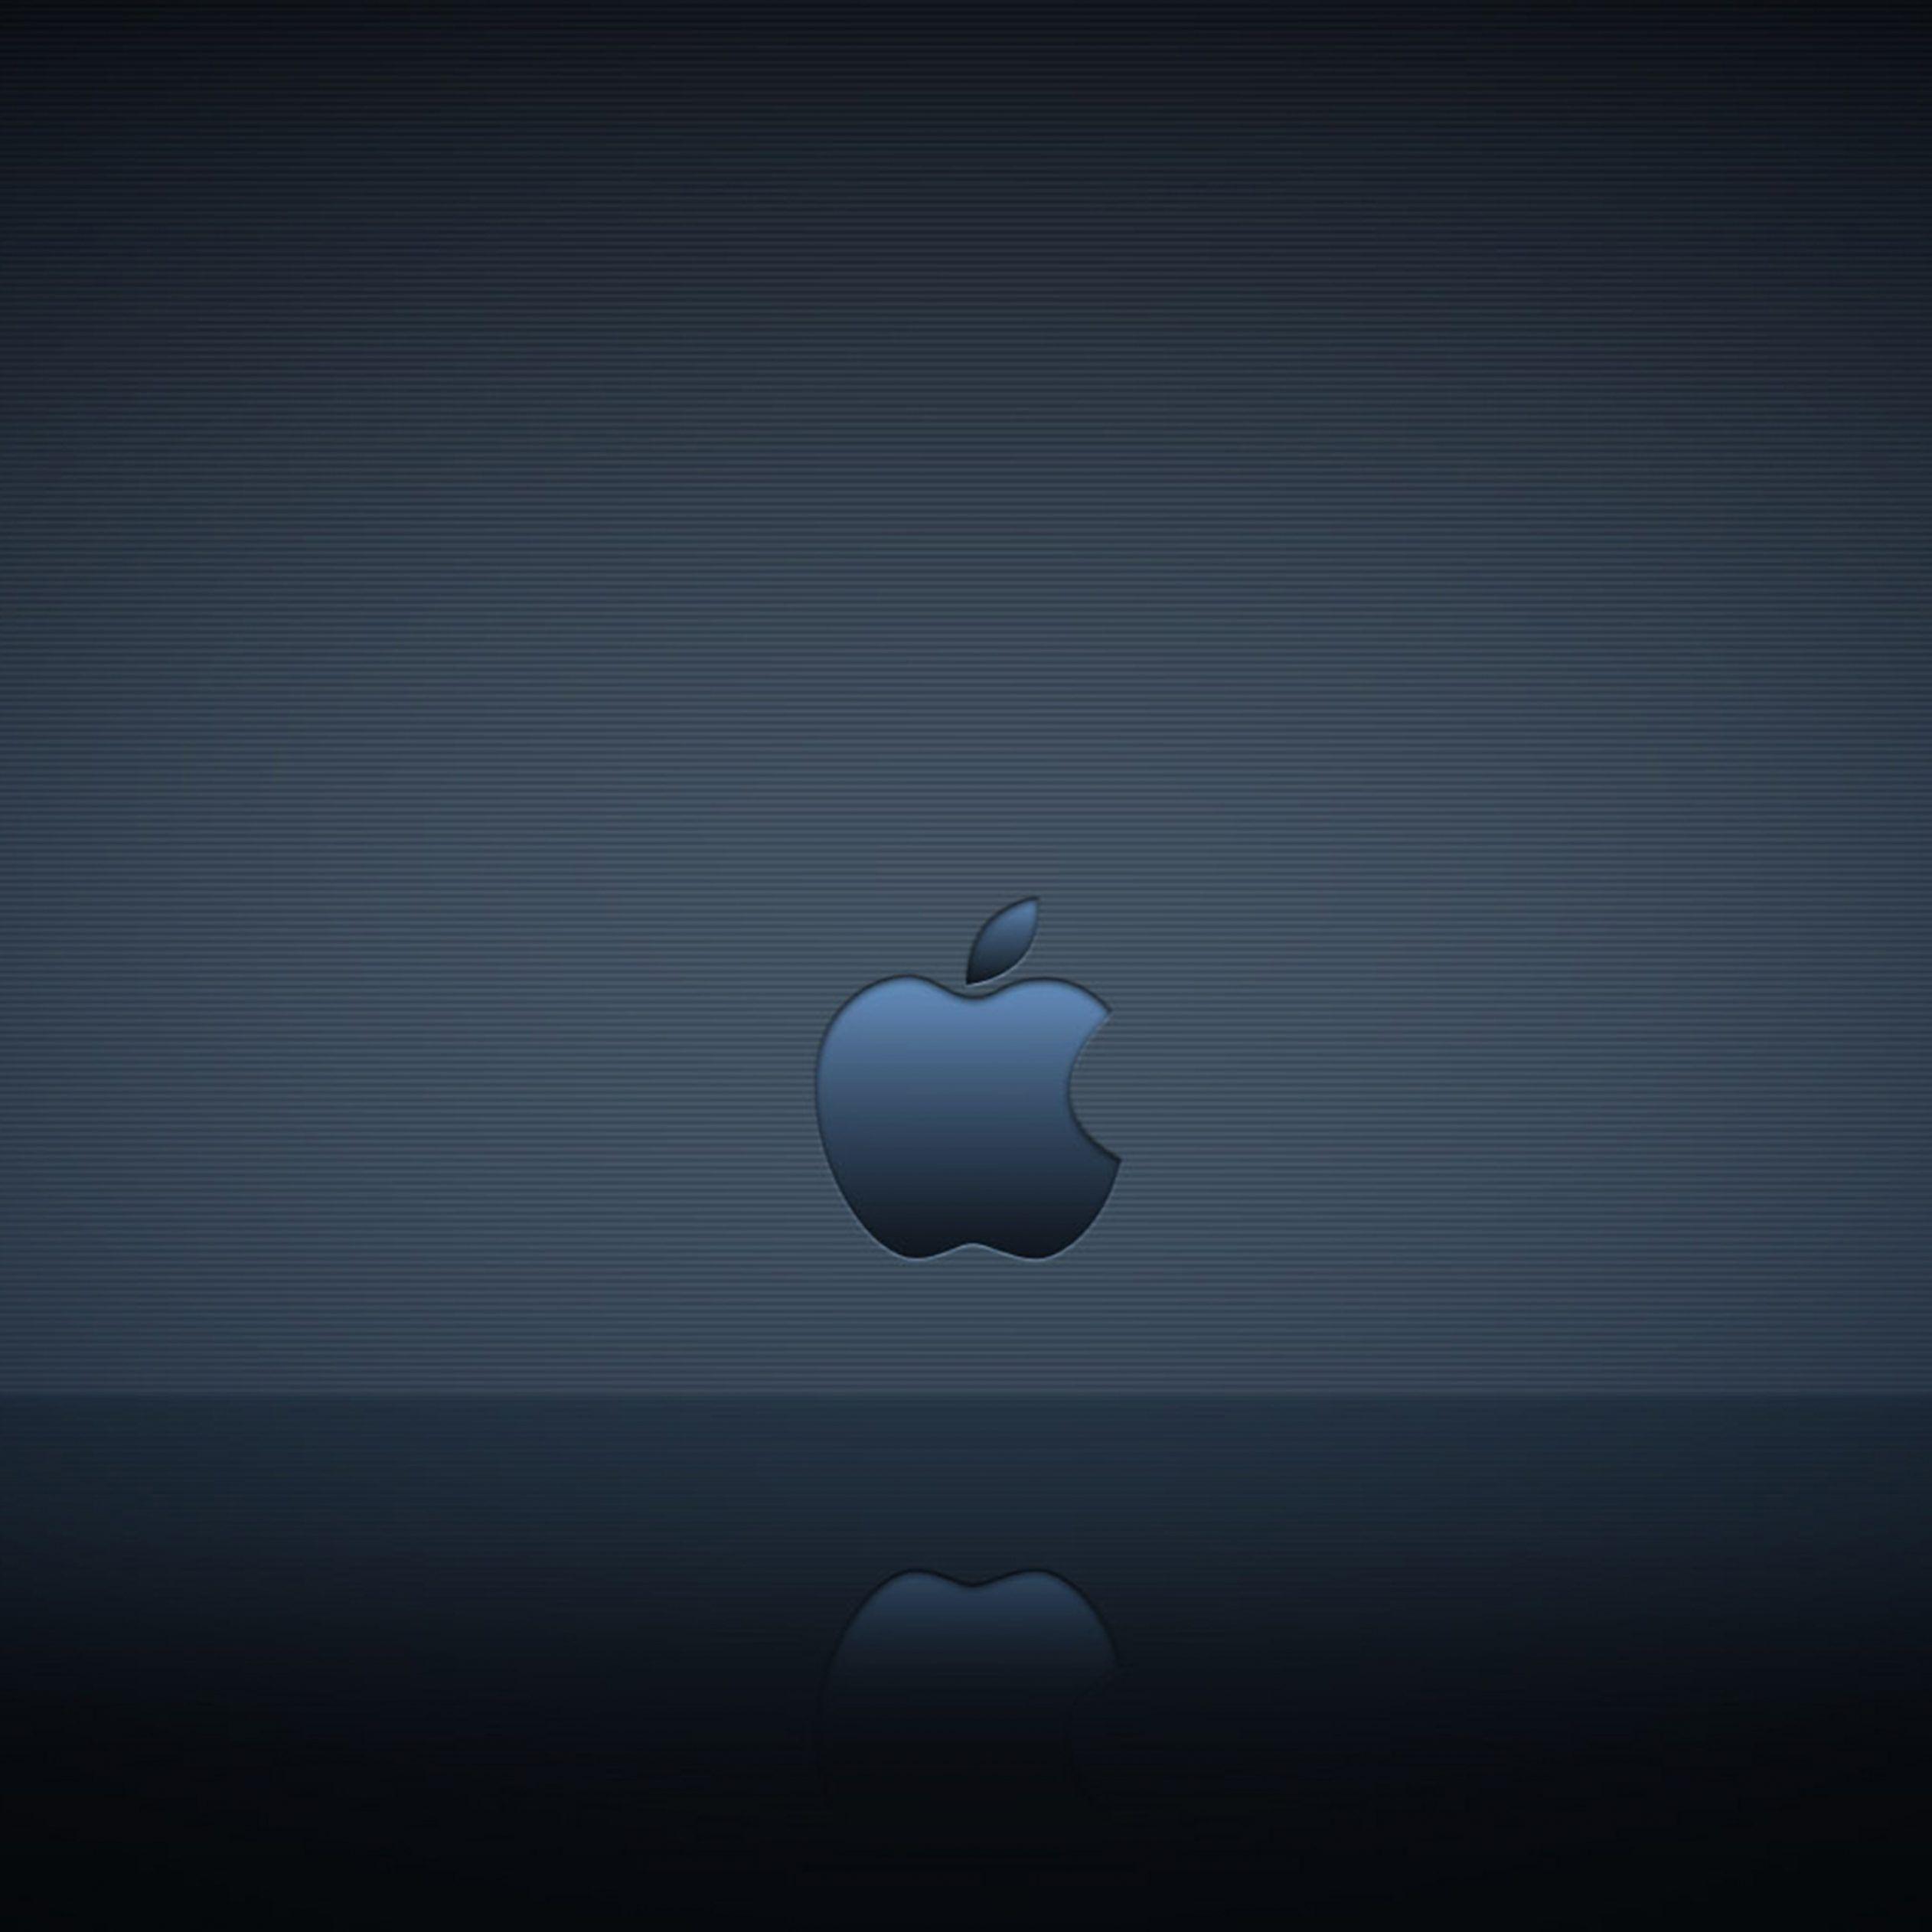 iPad Pro Apple Logo Wallpapers - Top Free iPad Pro Apple Logo ...